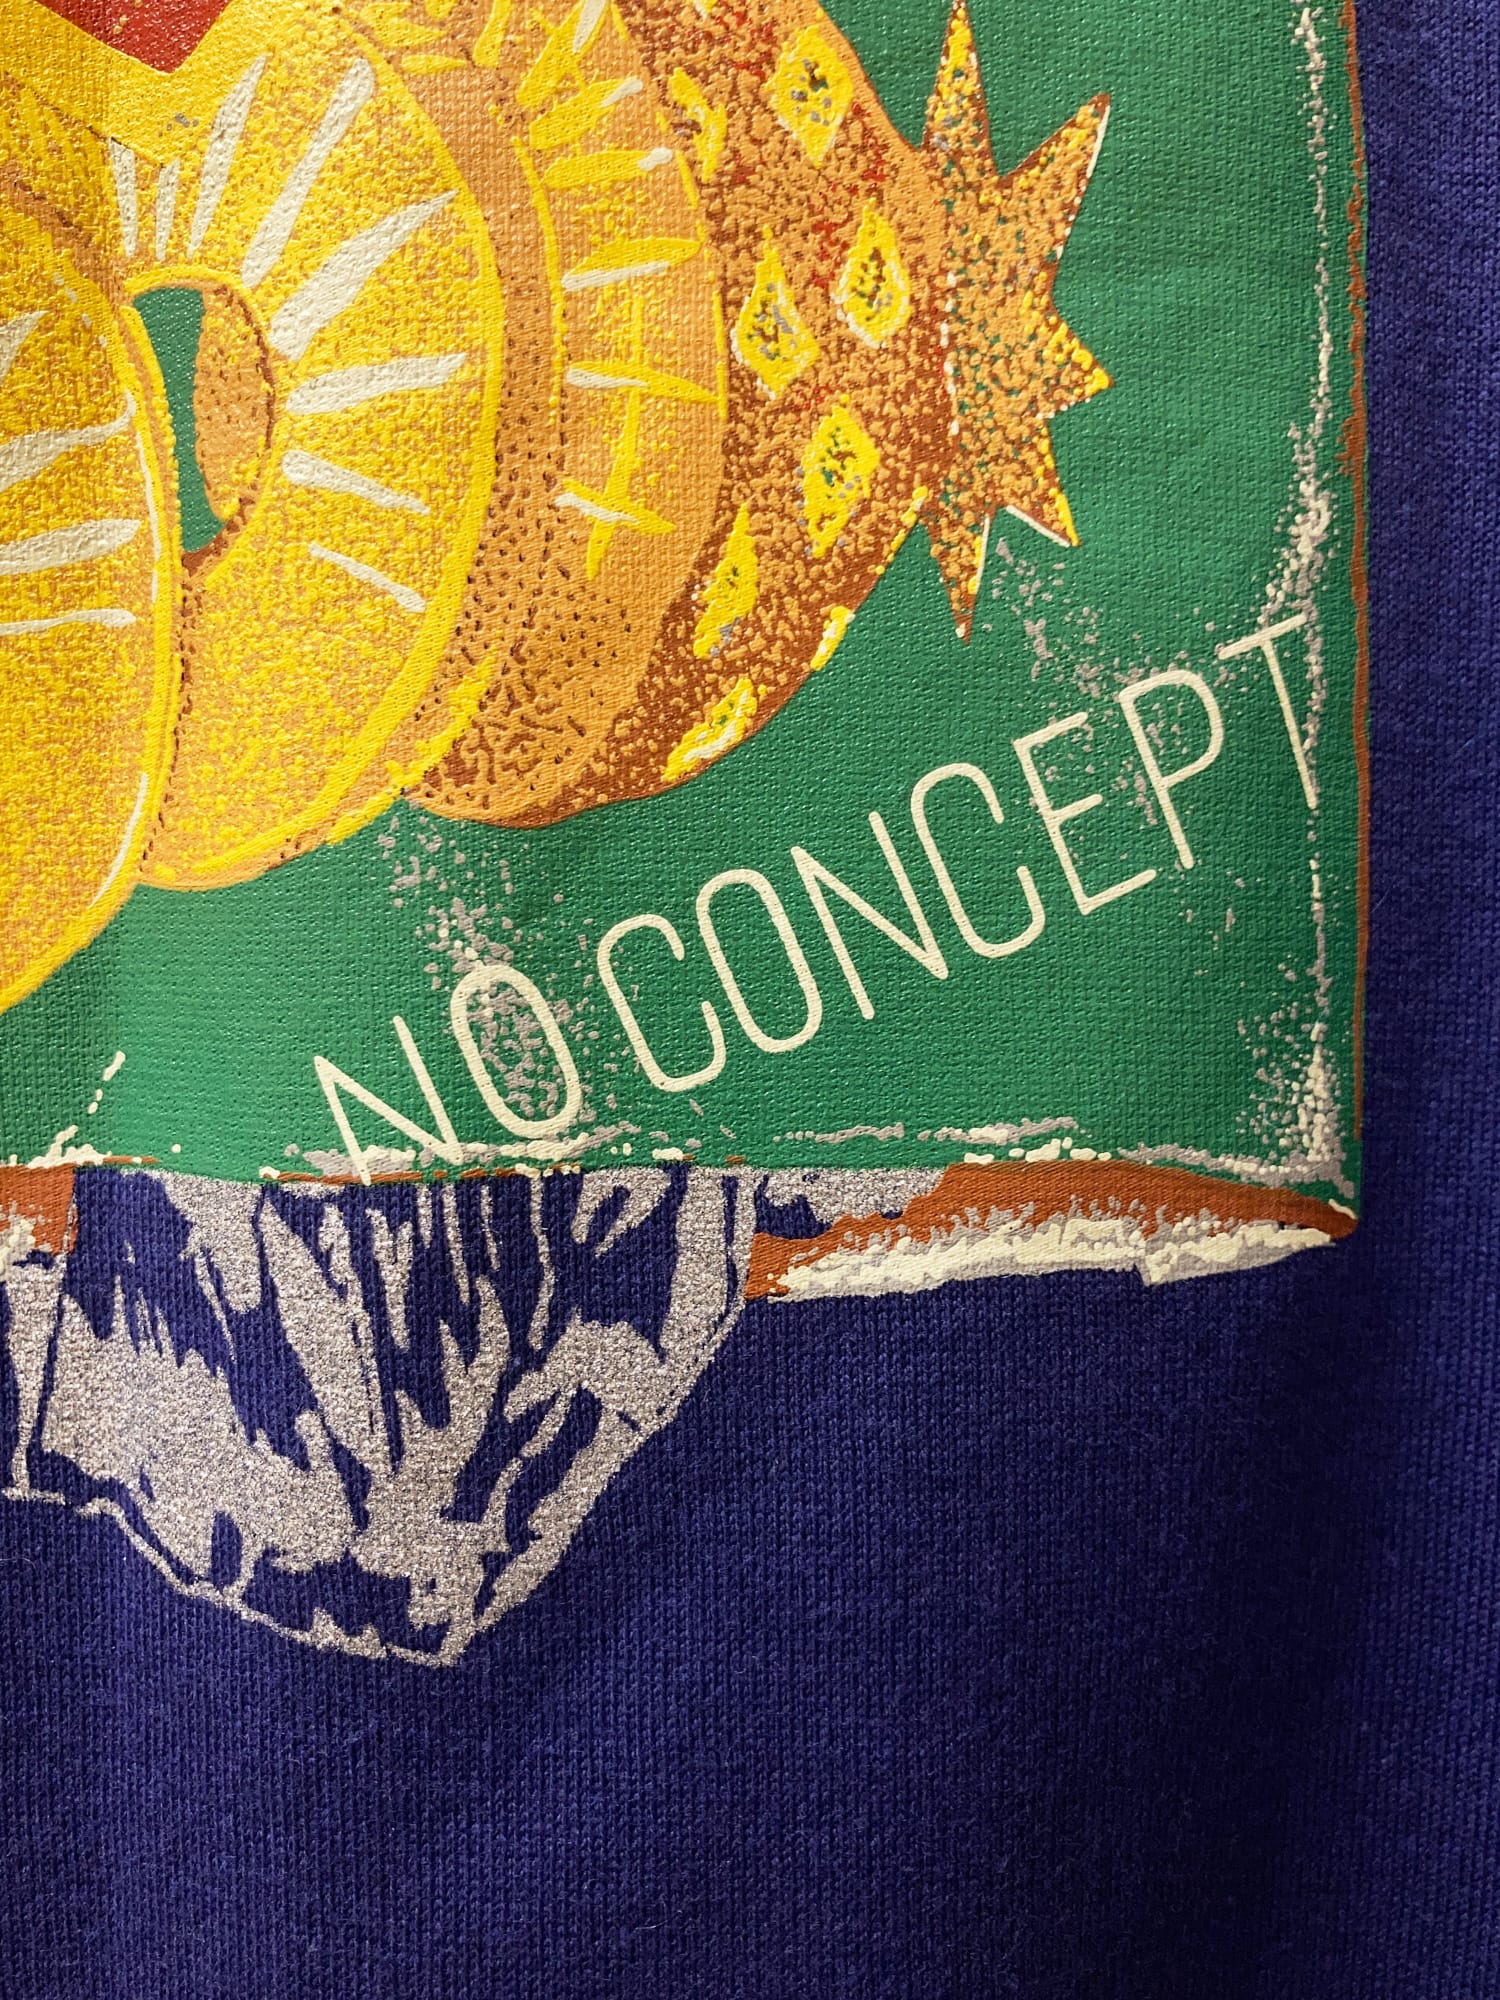 No Concept But Good Sense by Yoichi Nagasawa blue pineapple can logo t-shirt